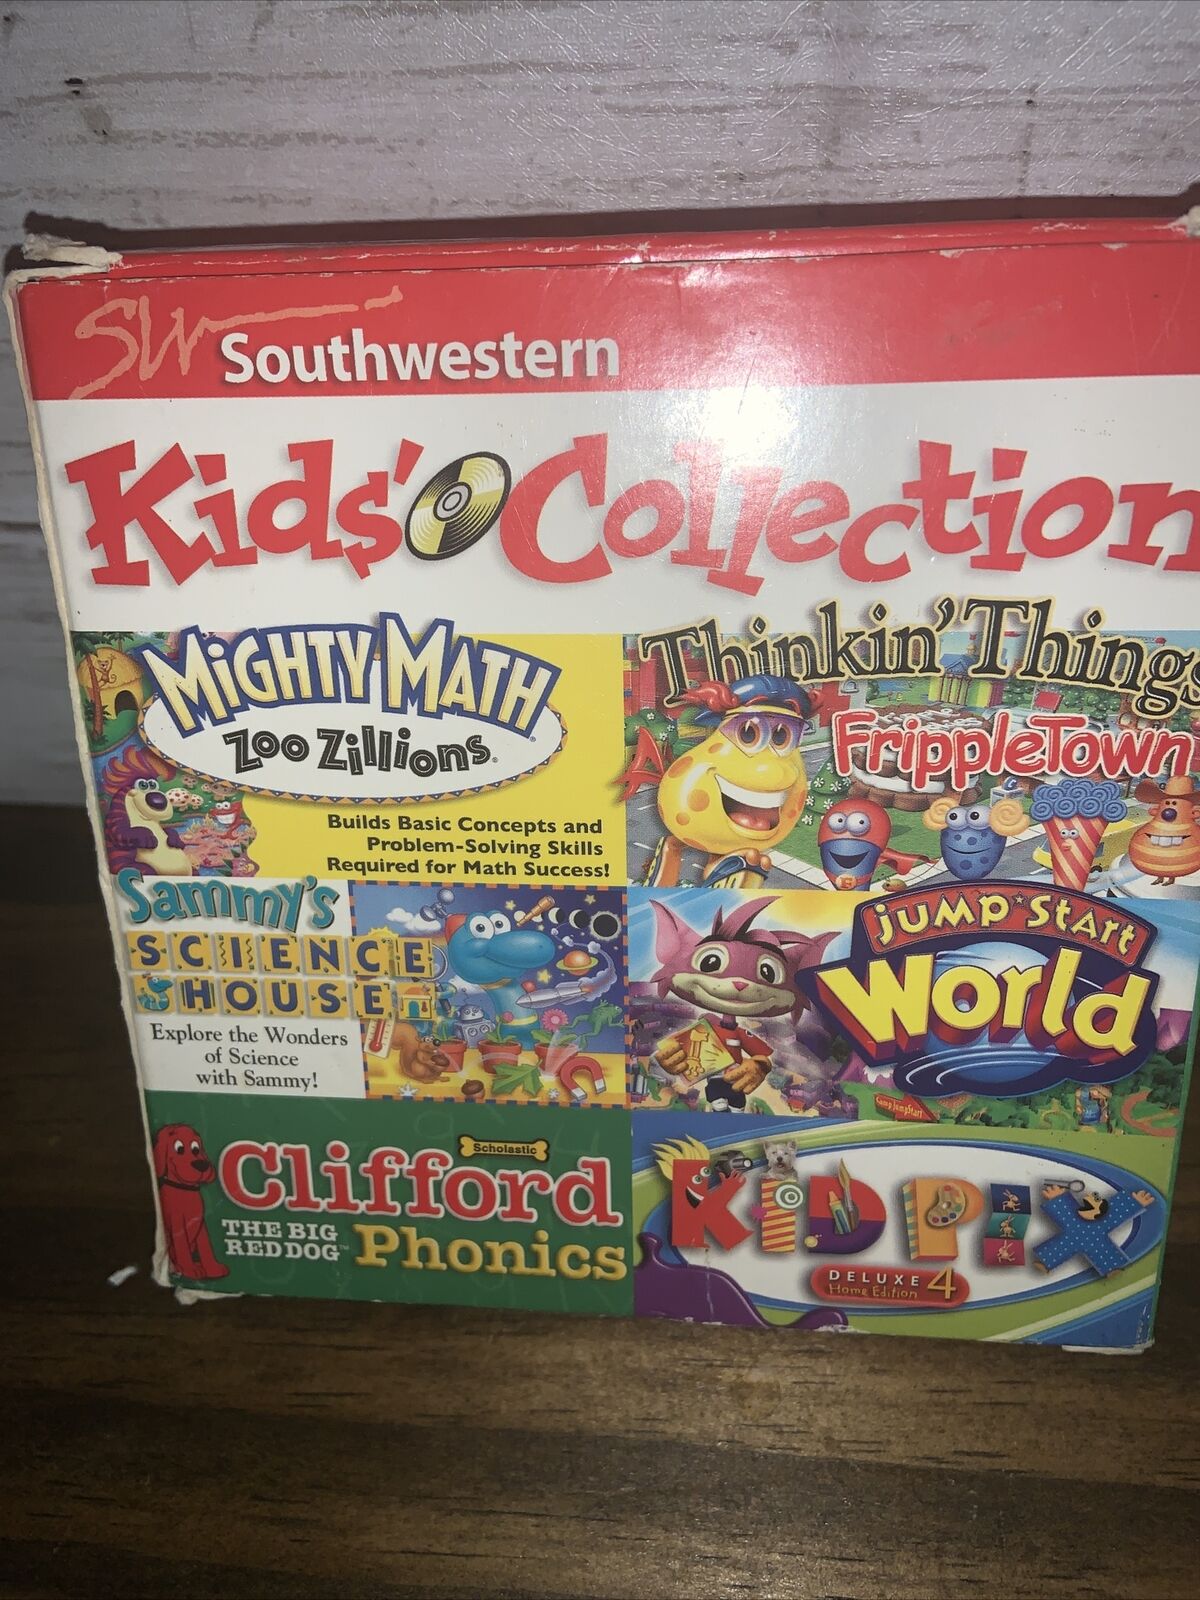 Southwestern Kids Collection Jump Start World Kid Pix (5 CD SET)